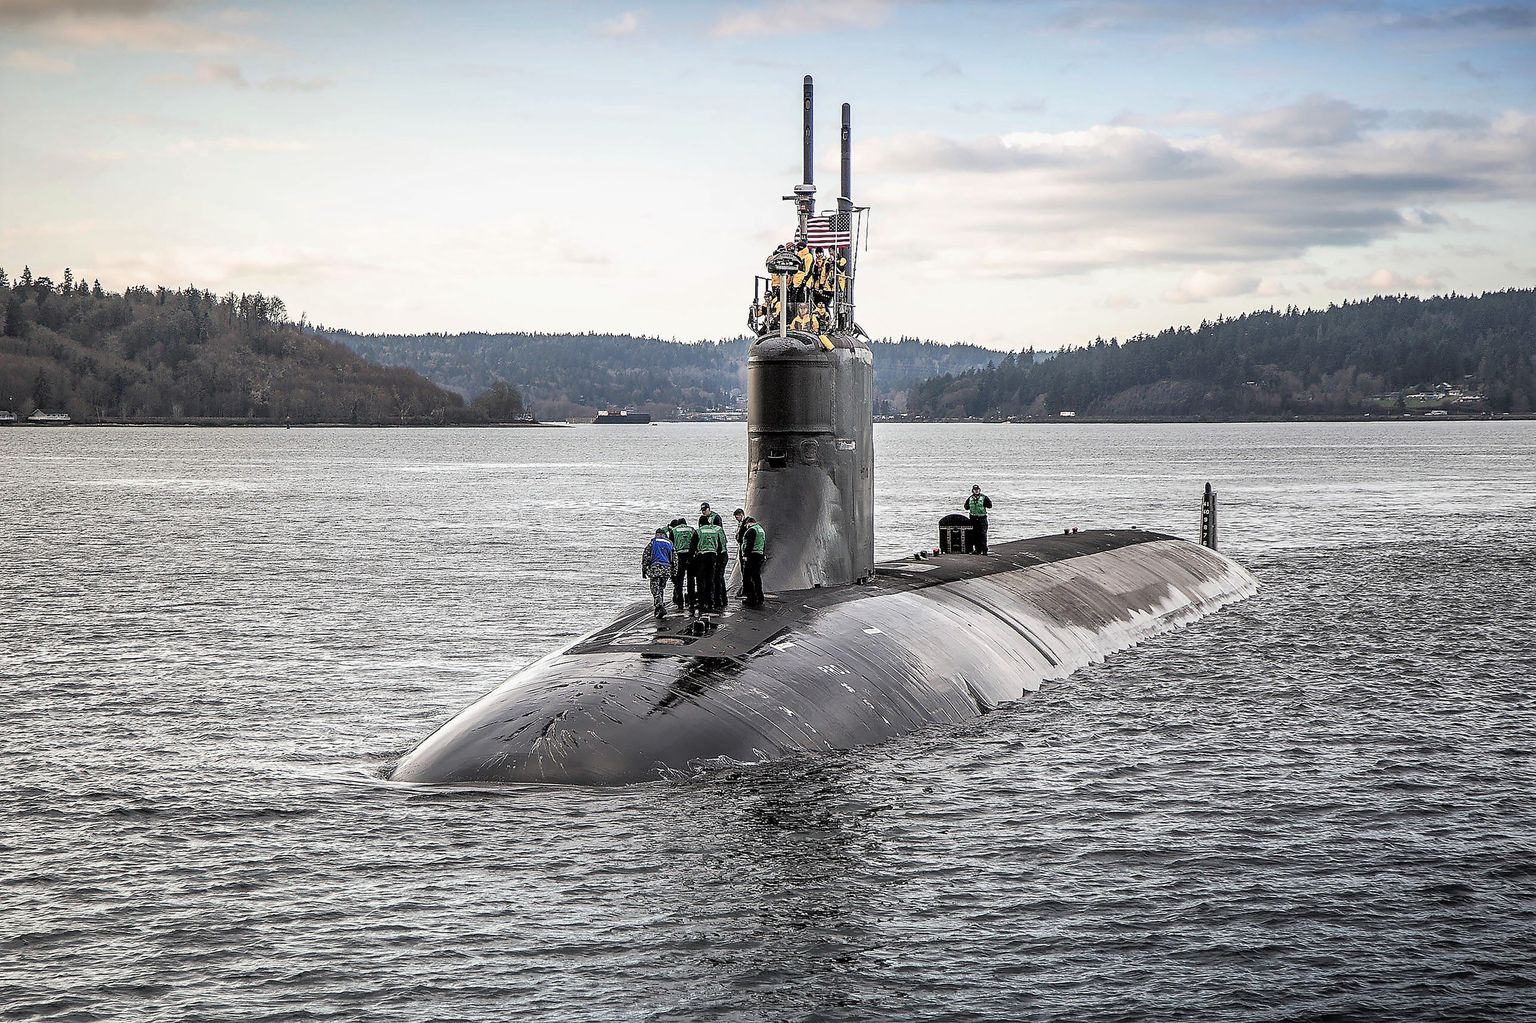 USS Connecticut detsembris 2016 lahkumas Washingtoni osariigi Puget Soundi laevatehasest, kus teda remonditi